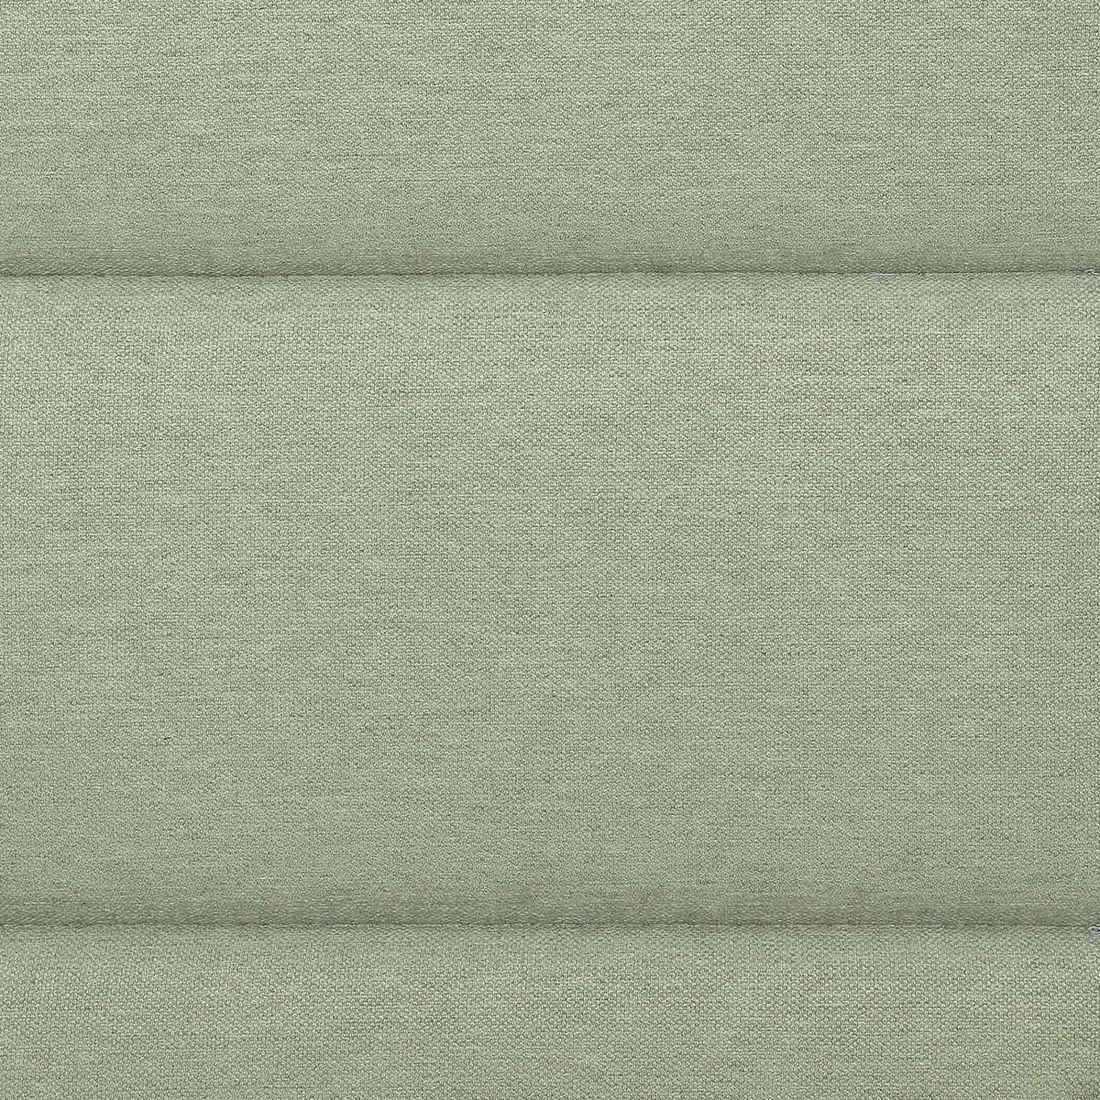 GO-DE Sesselauflage mittel 108x48cm Polyester